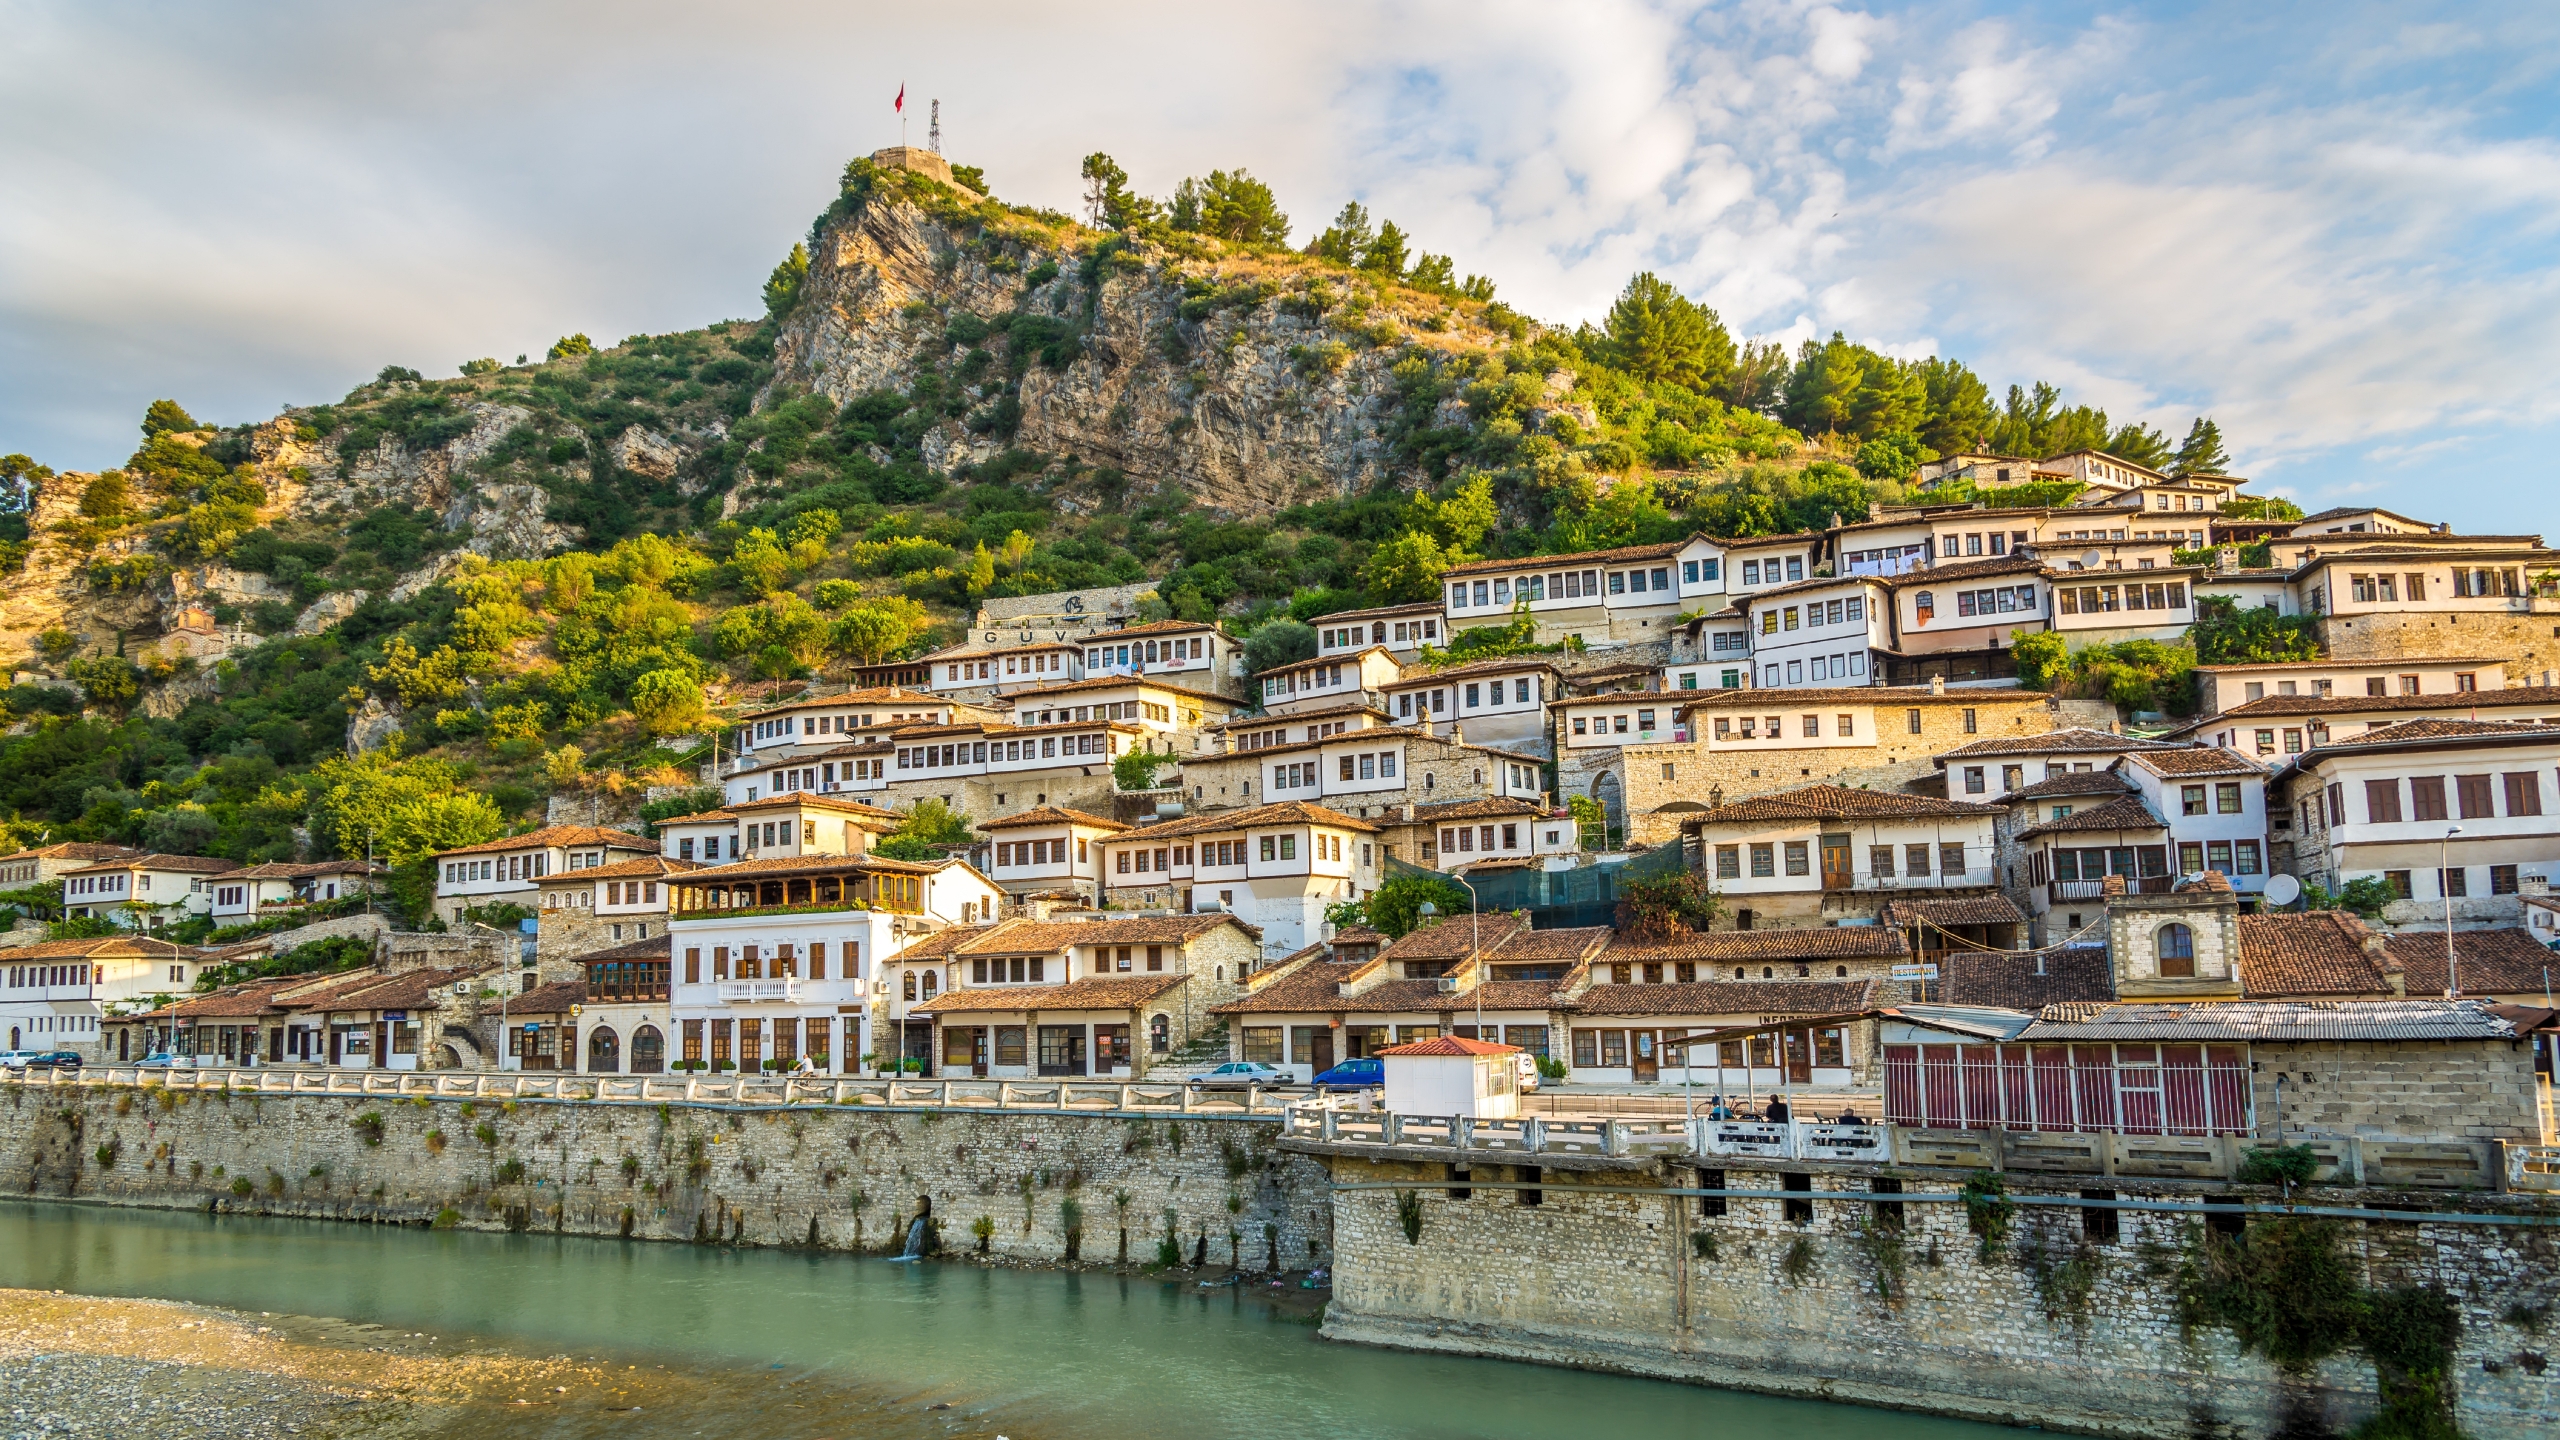 Berat City Albania for 2560 x 1440 HDTV resolution